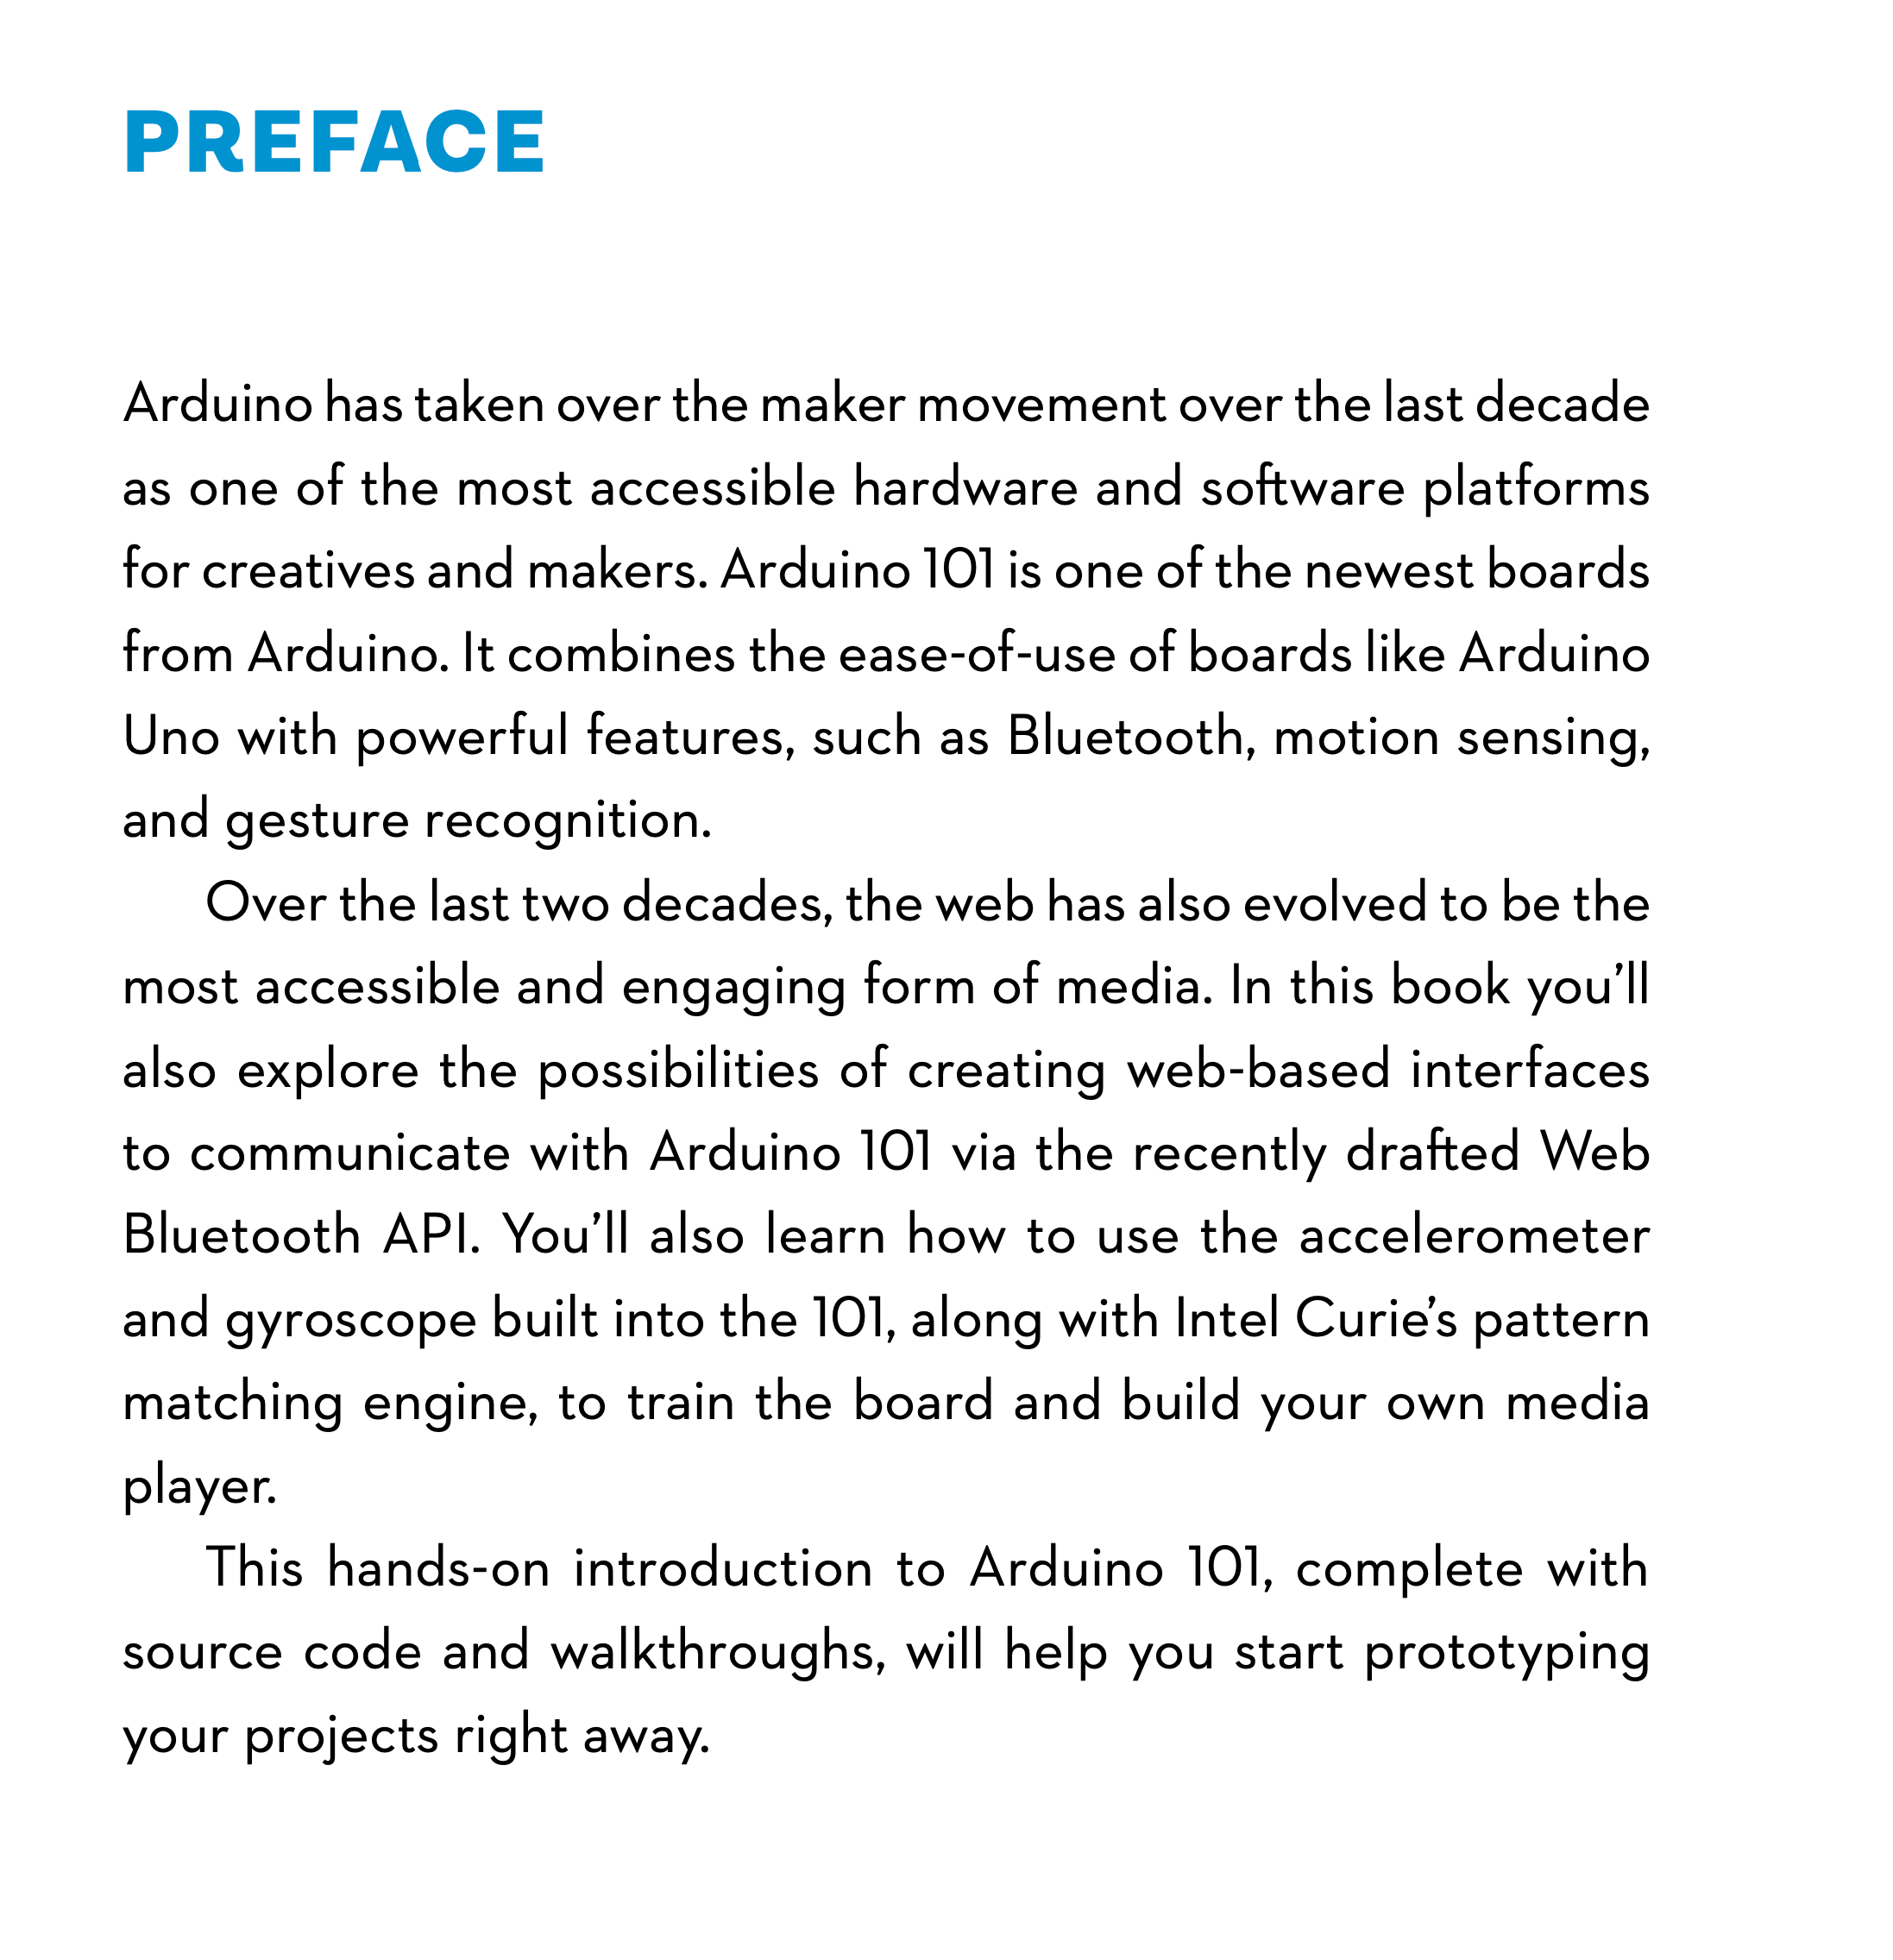 Jumpstarting the Arduino 101 preface